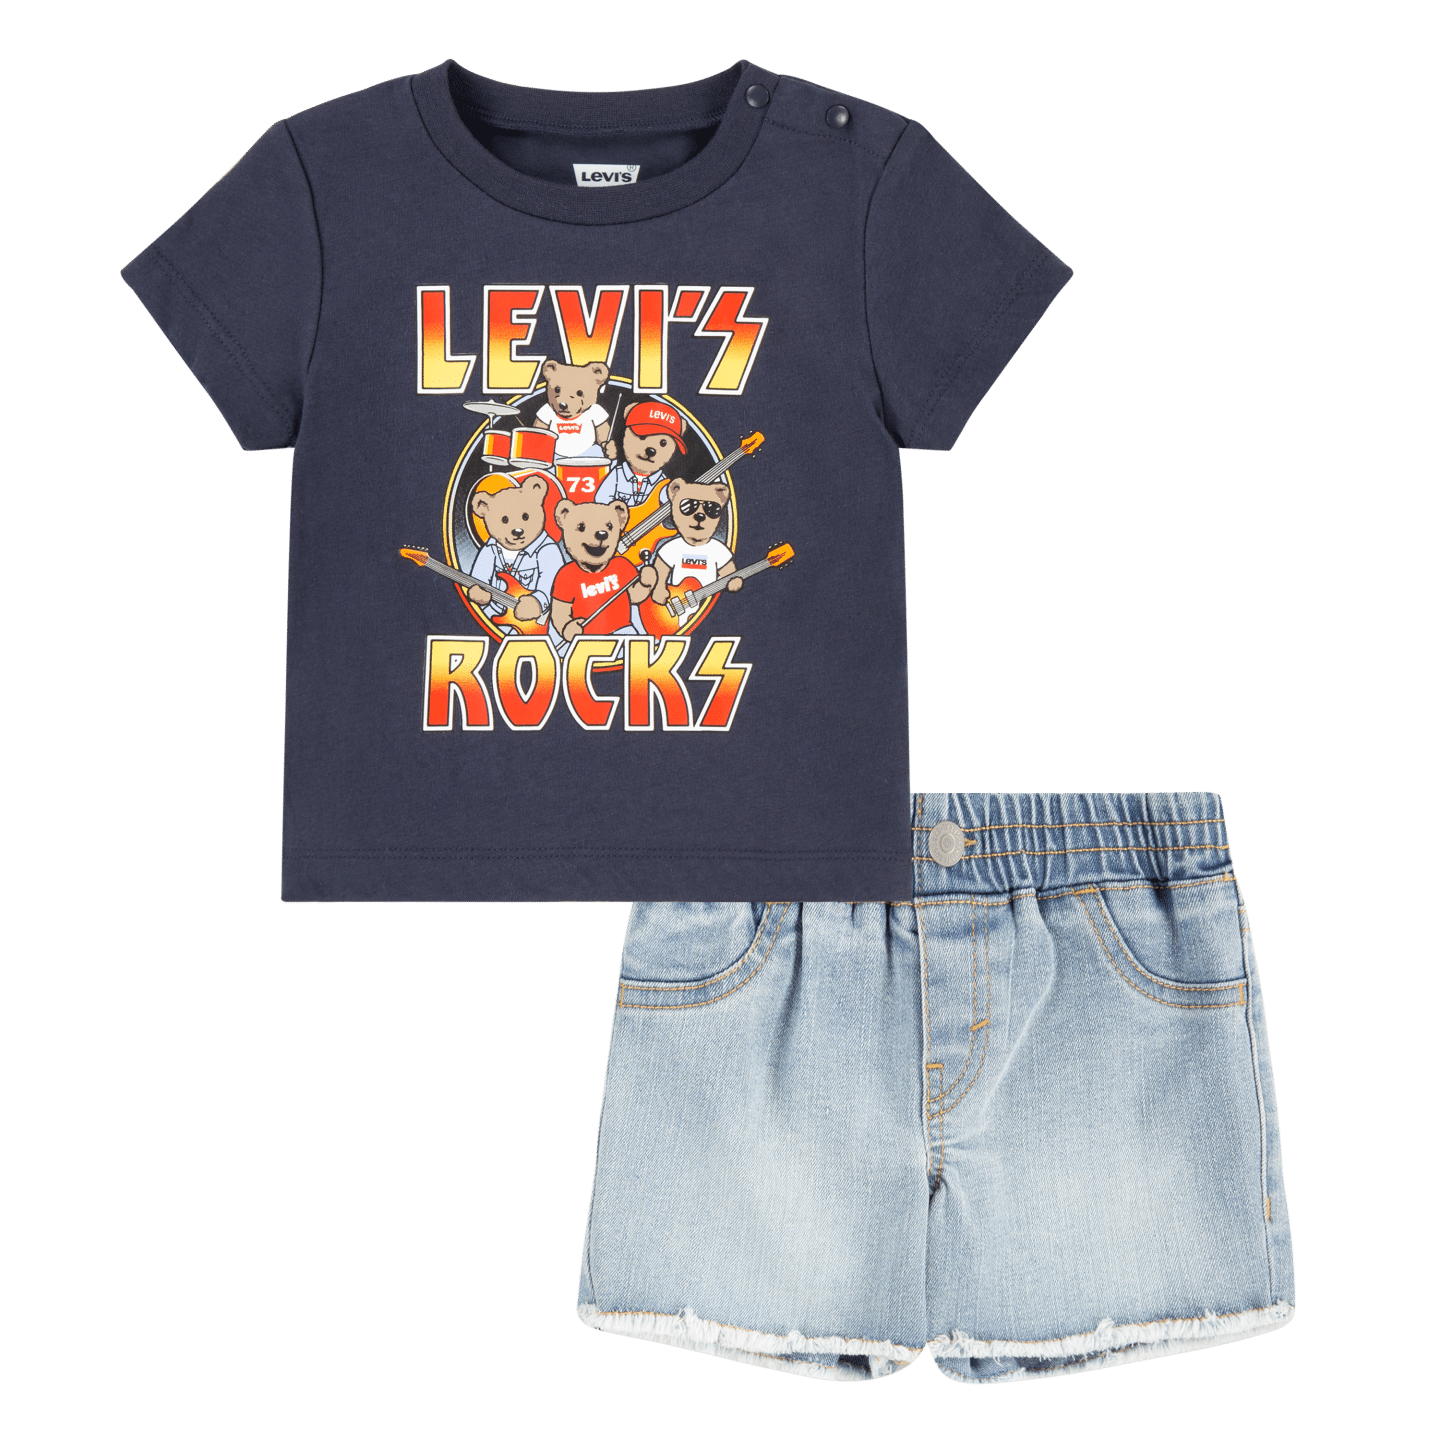 Levi's Rocks kids navy teddy bear tshirt and shorts set front view